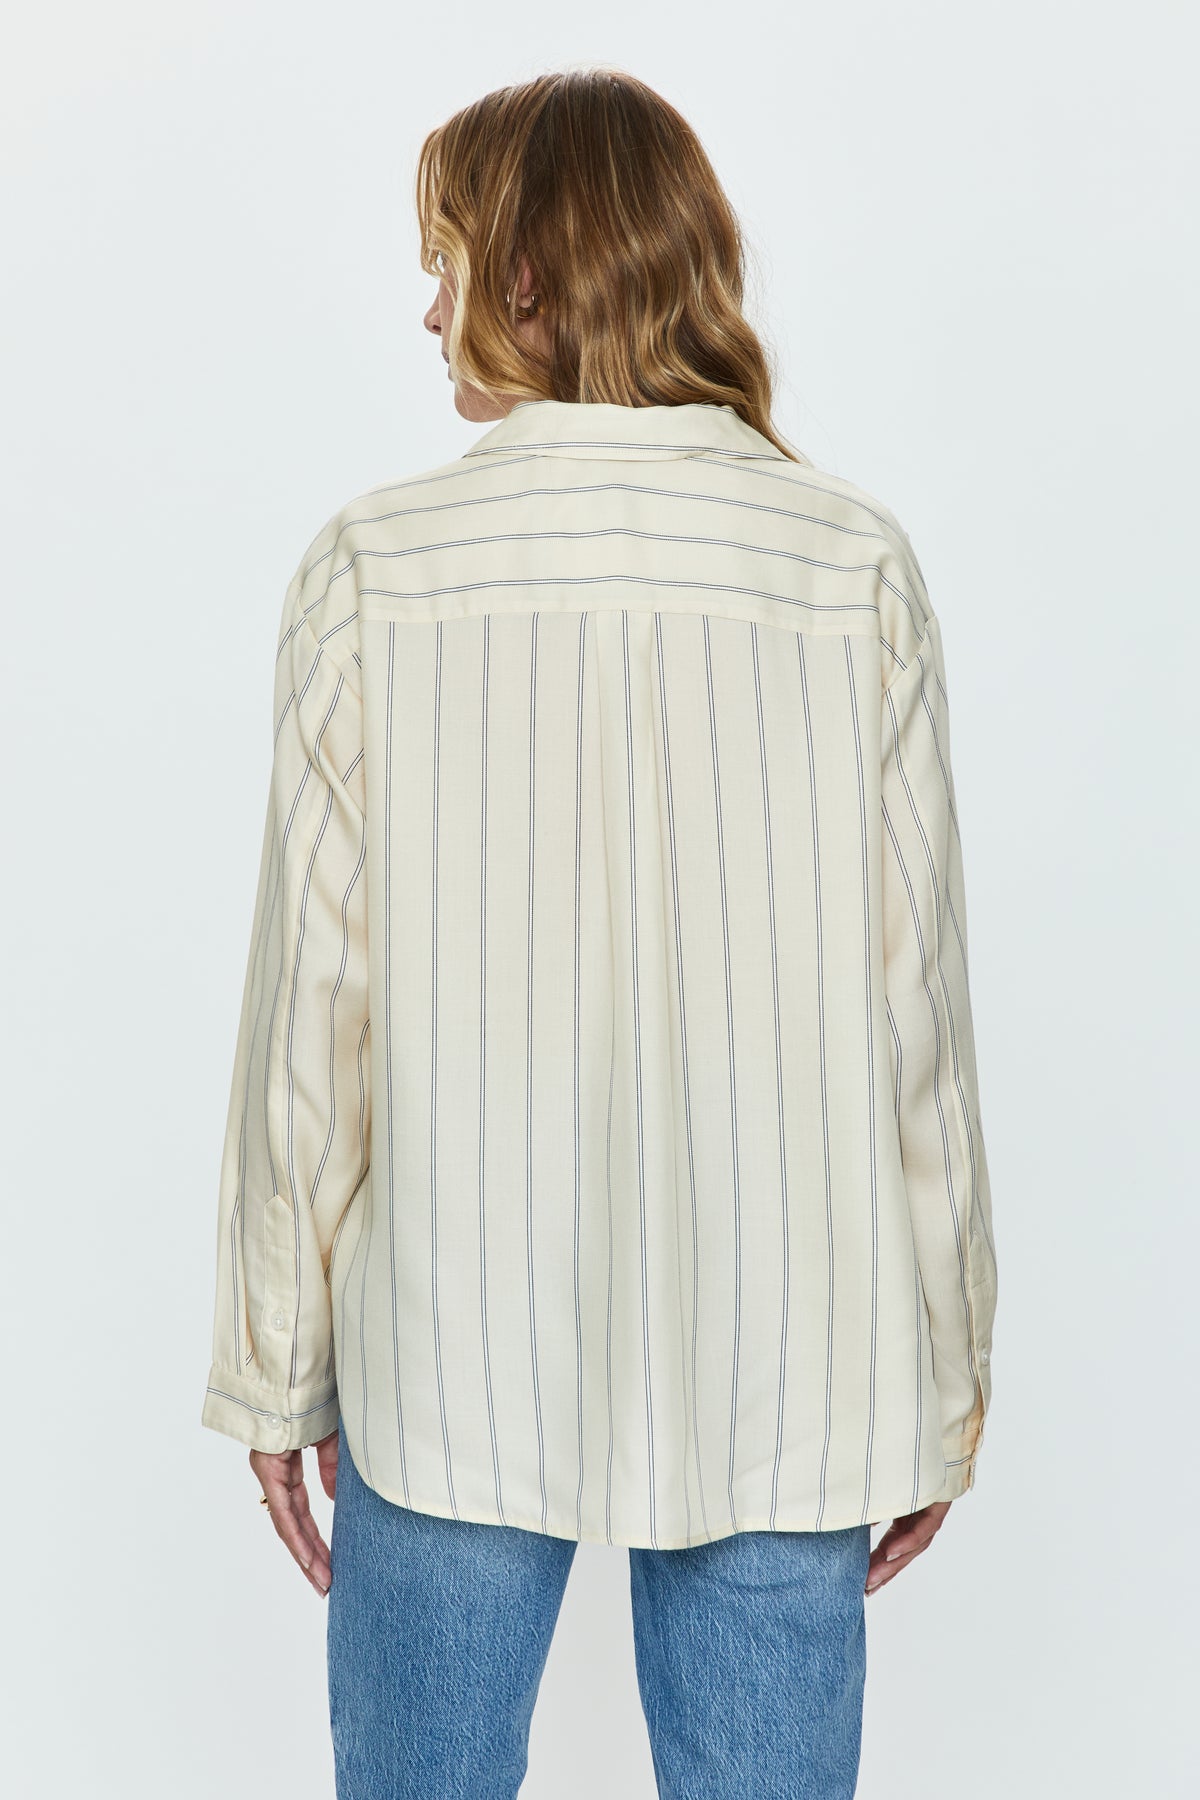 Irene Shirt - Tan Wide Stripe